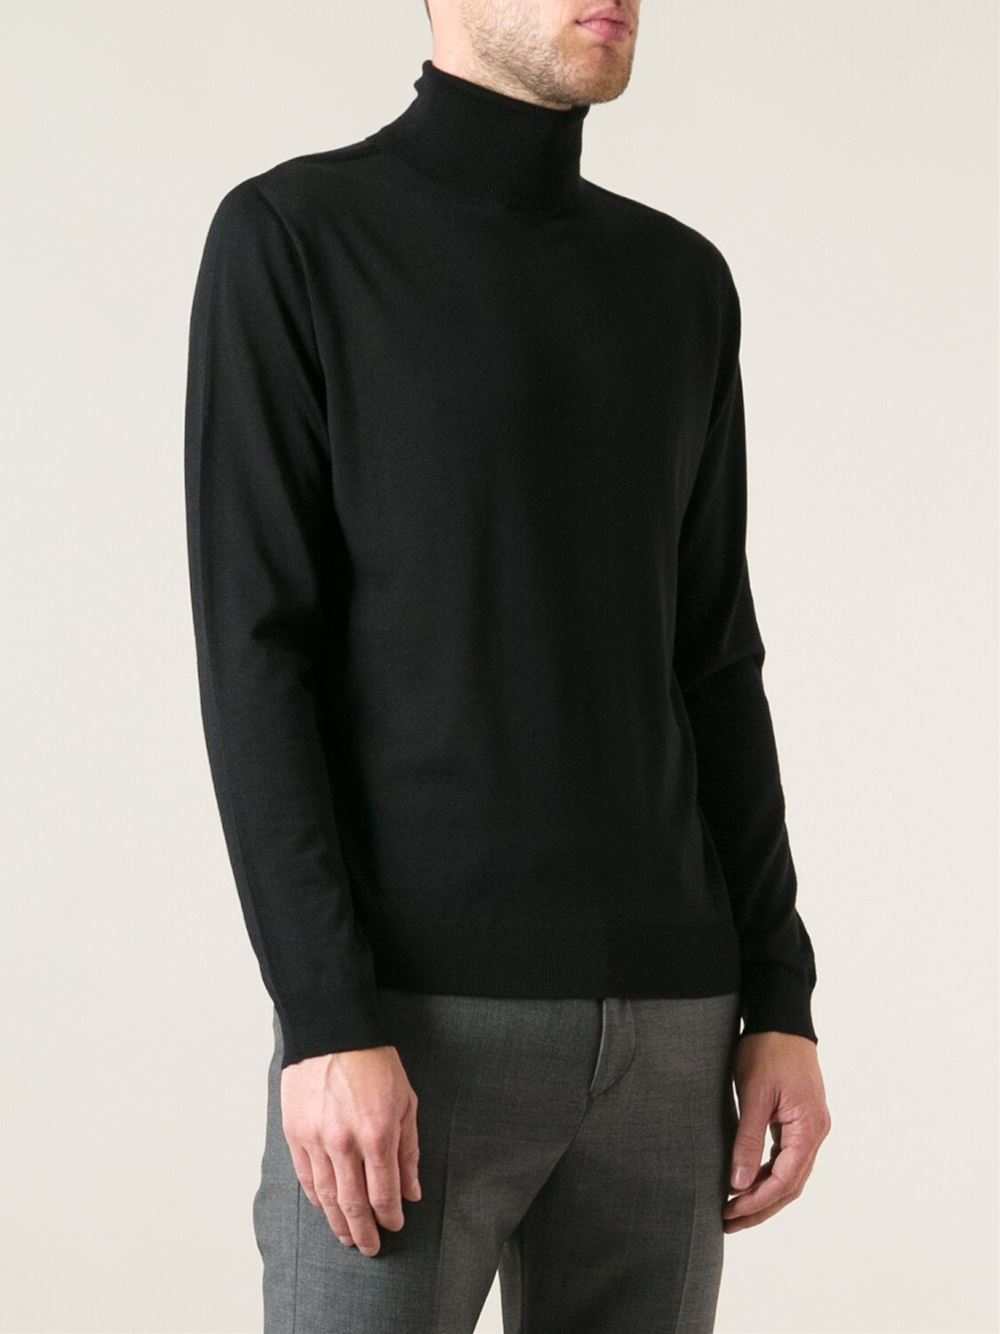 Lyst - Calvin Klein Knit Sweater in Black for Men